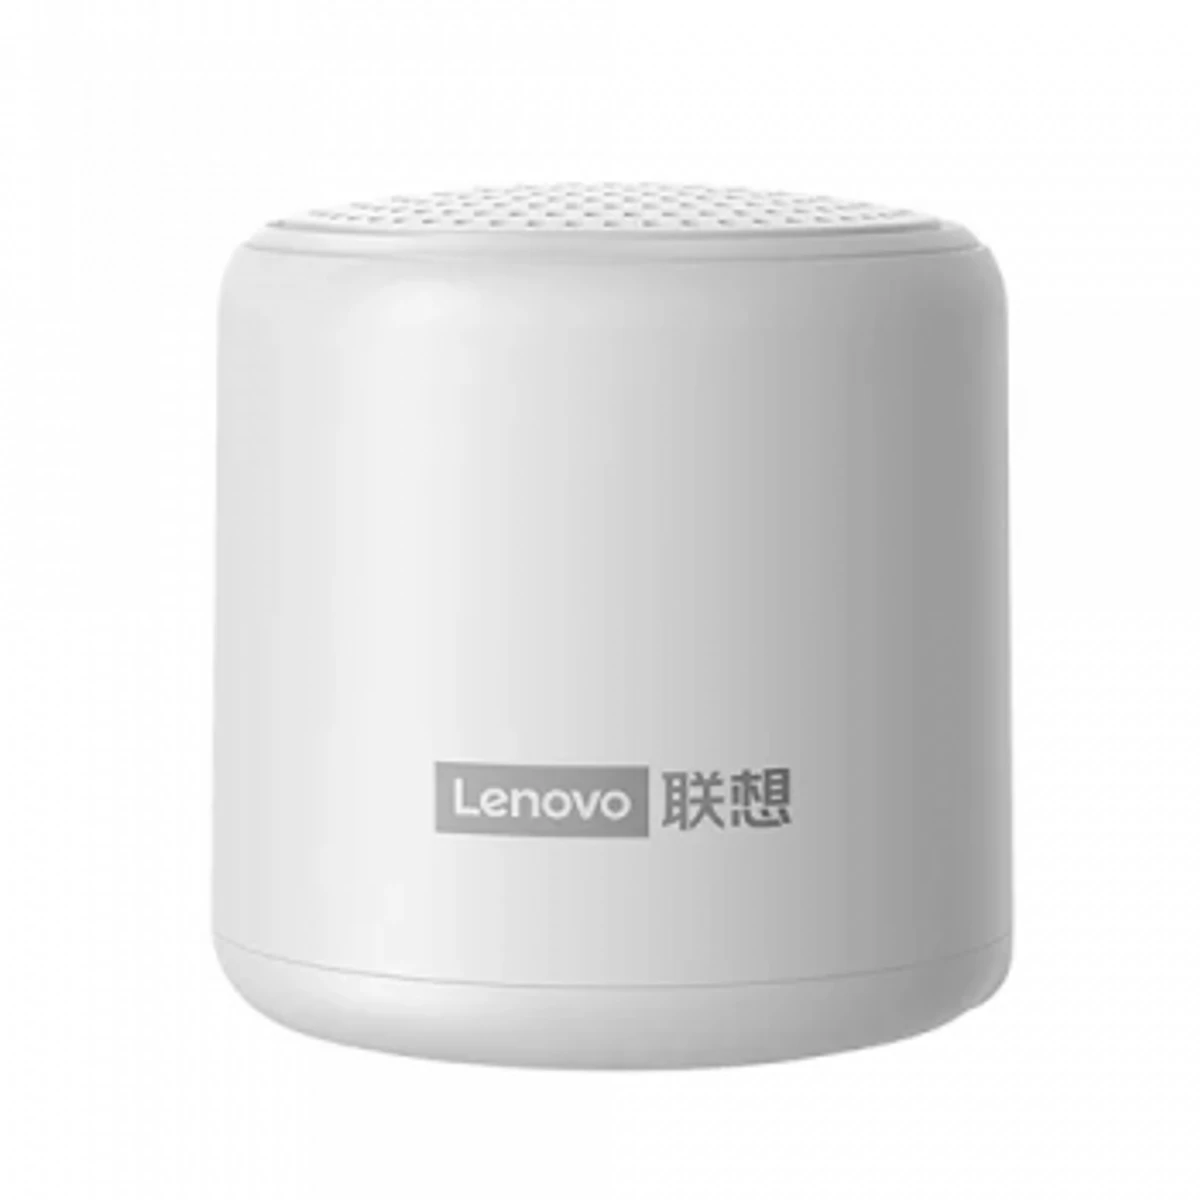 Lenovo L01 Bluetooth Speaker Portable Outdoor Loudspeaker